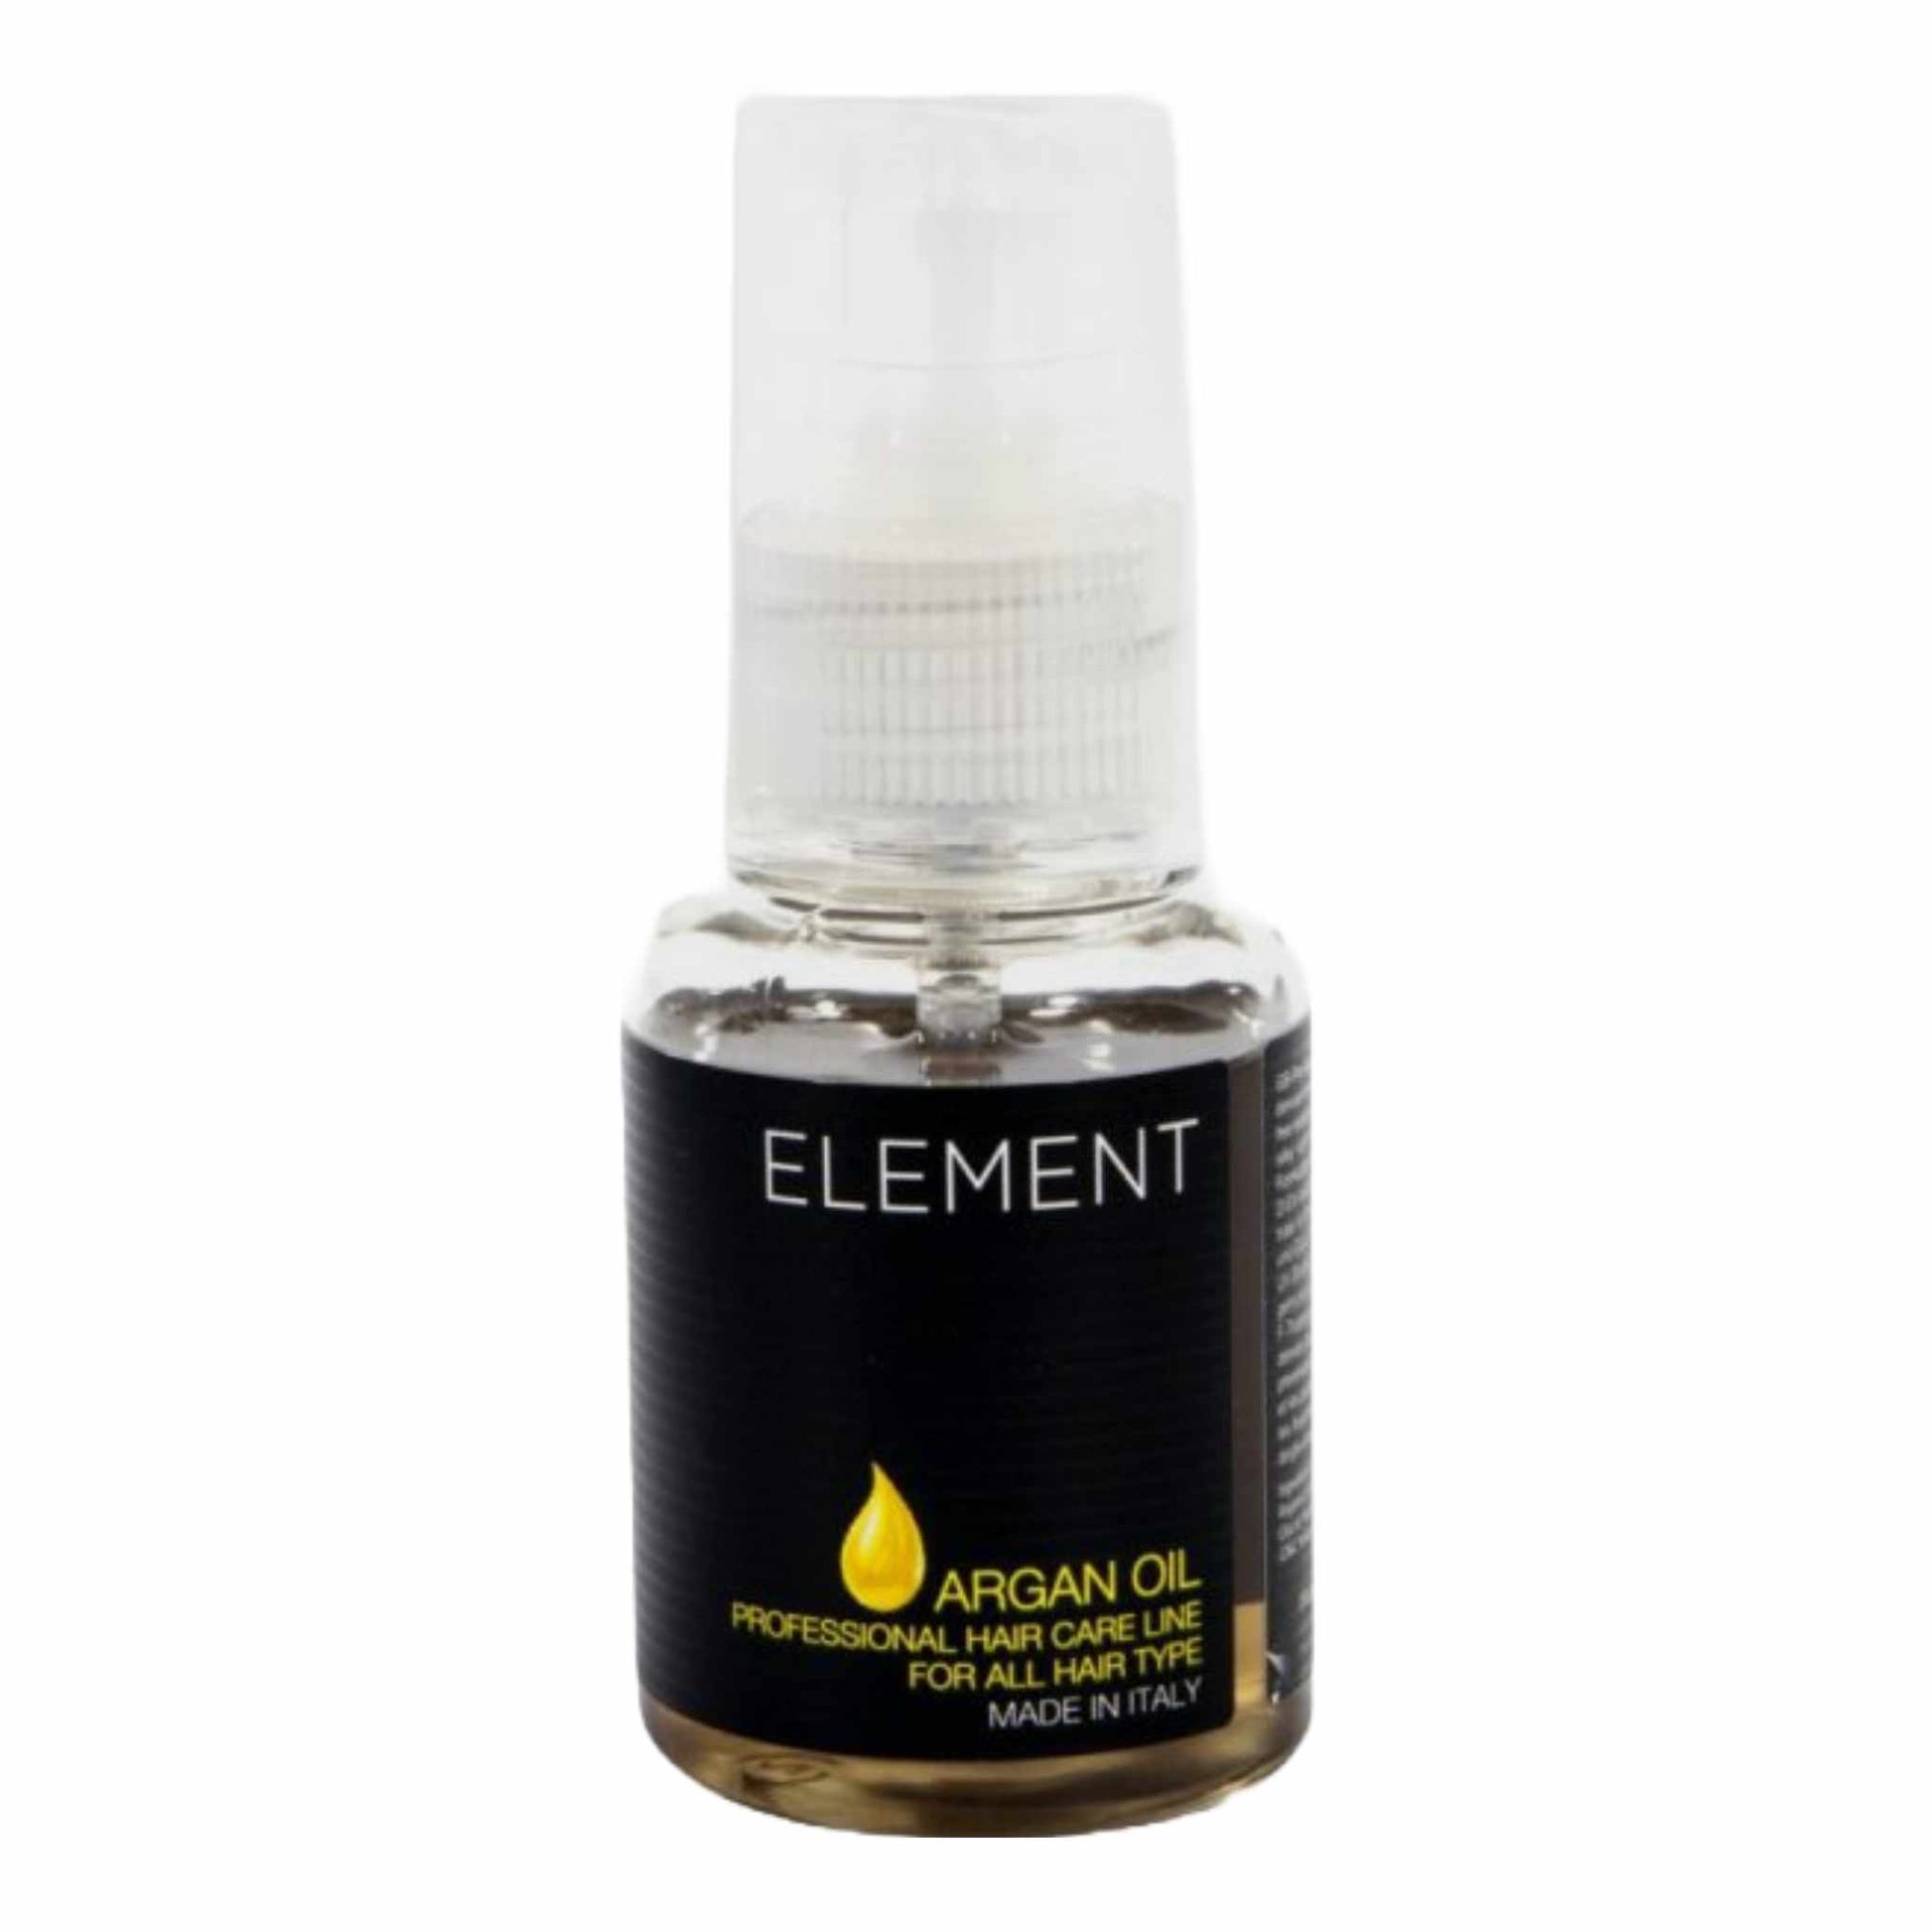 Element Argan Oil Professional Hair Care Line 50 ml